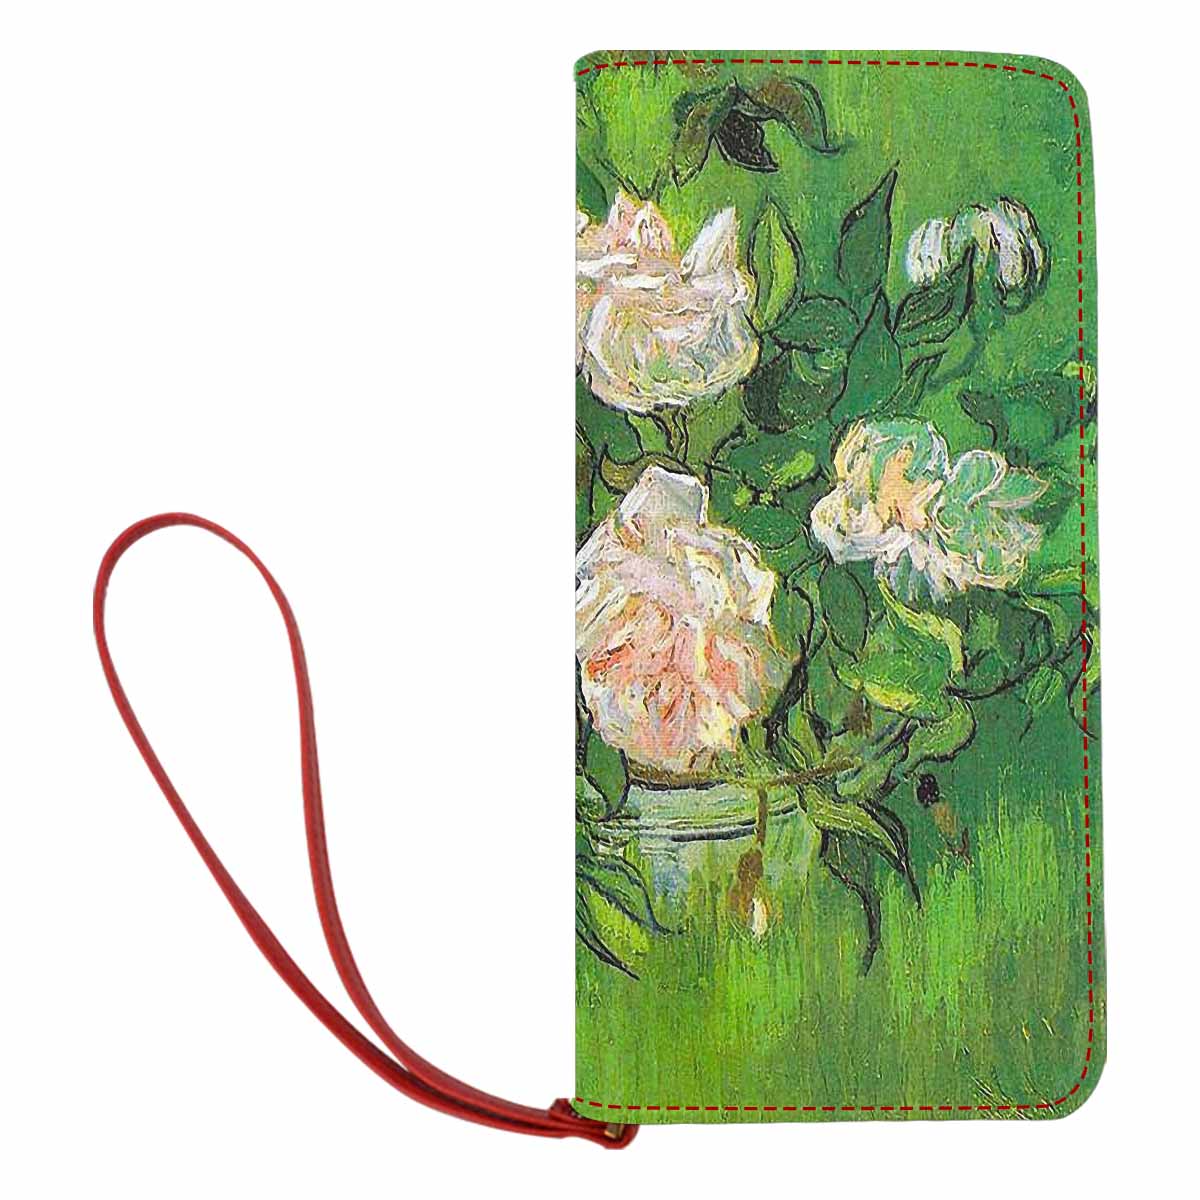 Vintage floral print, womens wallet, clutch purse, red trim, Design 06